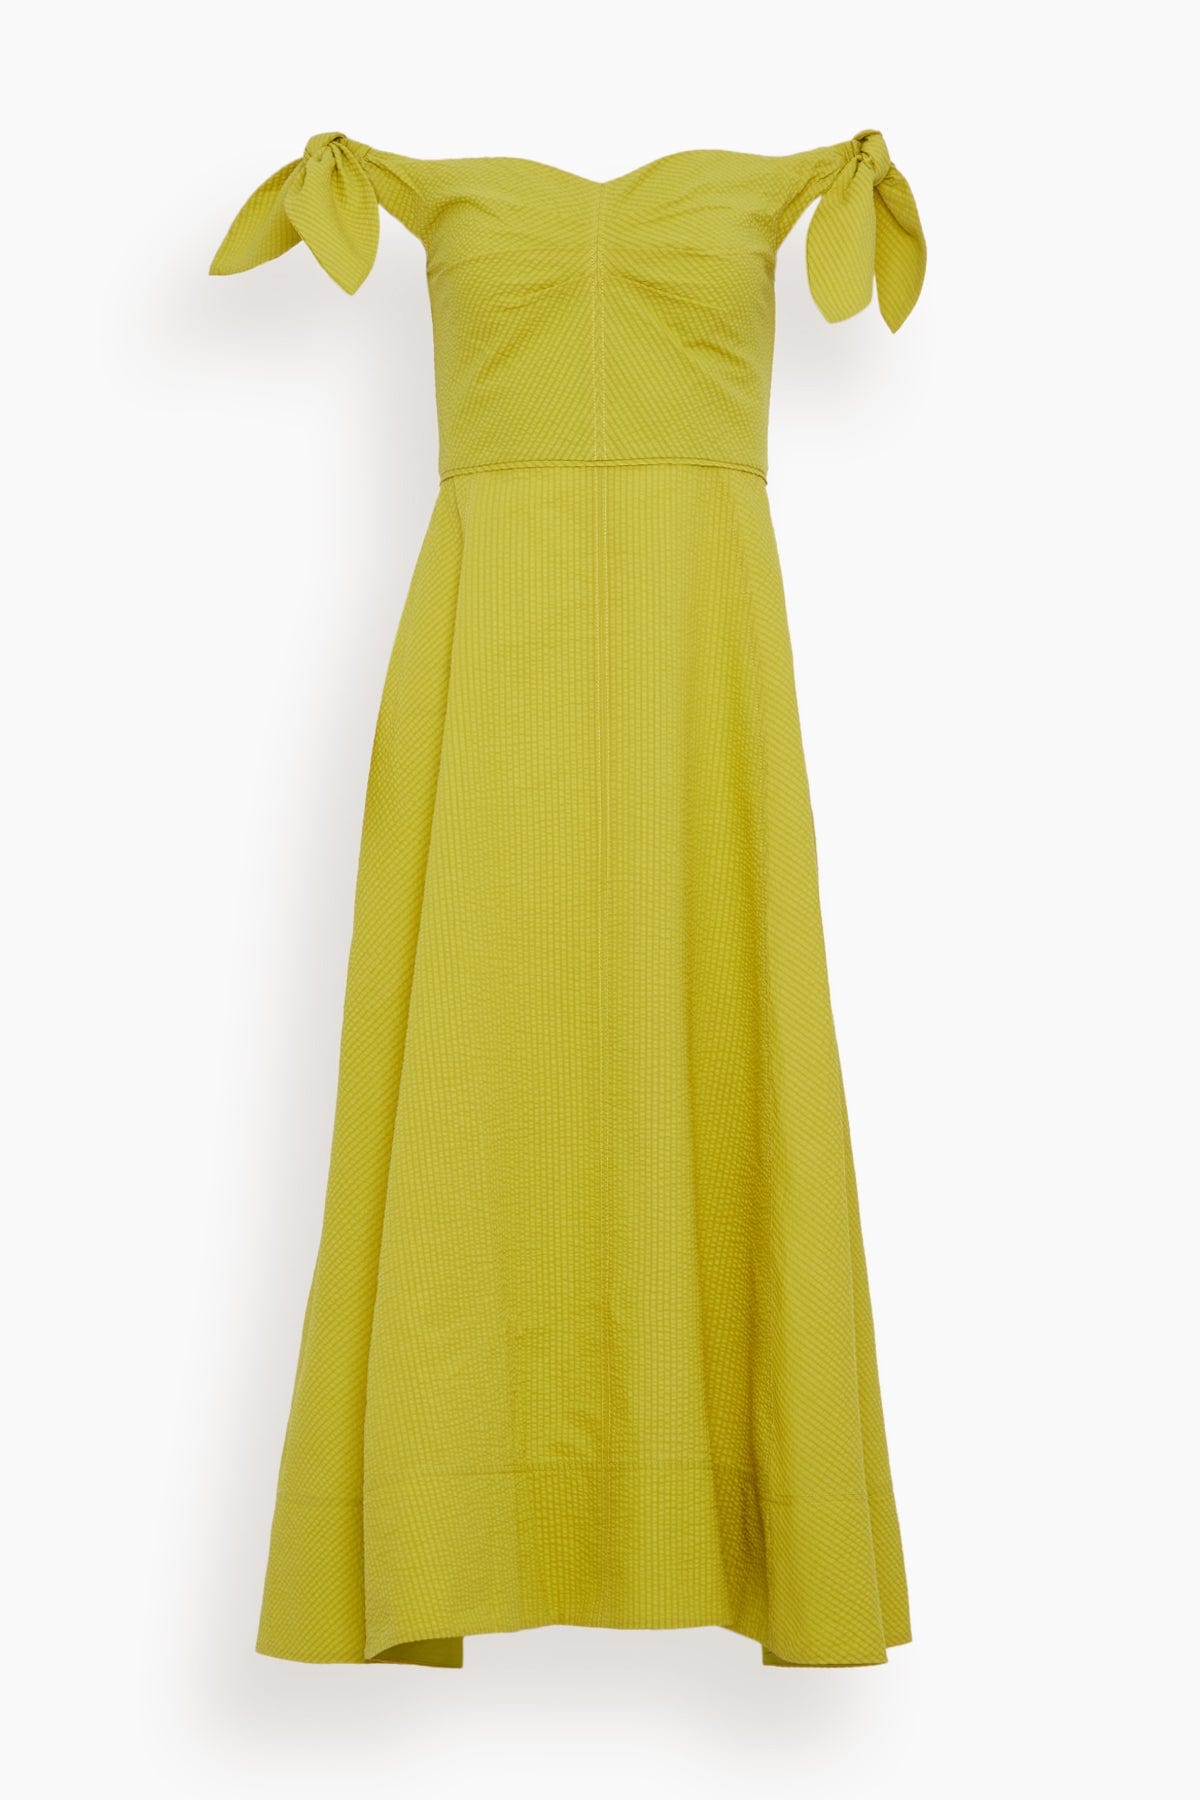 Tanya Taylor Dresses Ashland Dress in Lime (TS)